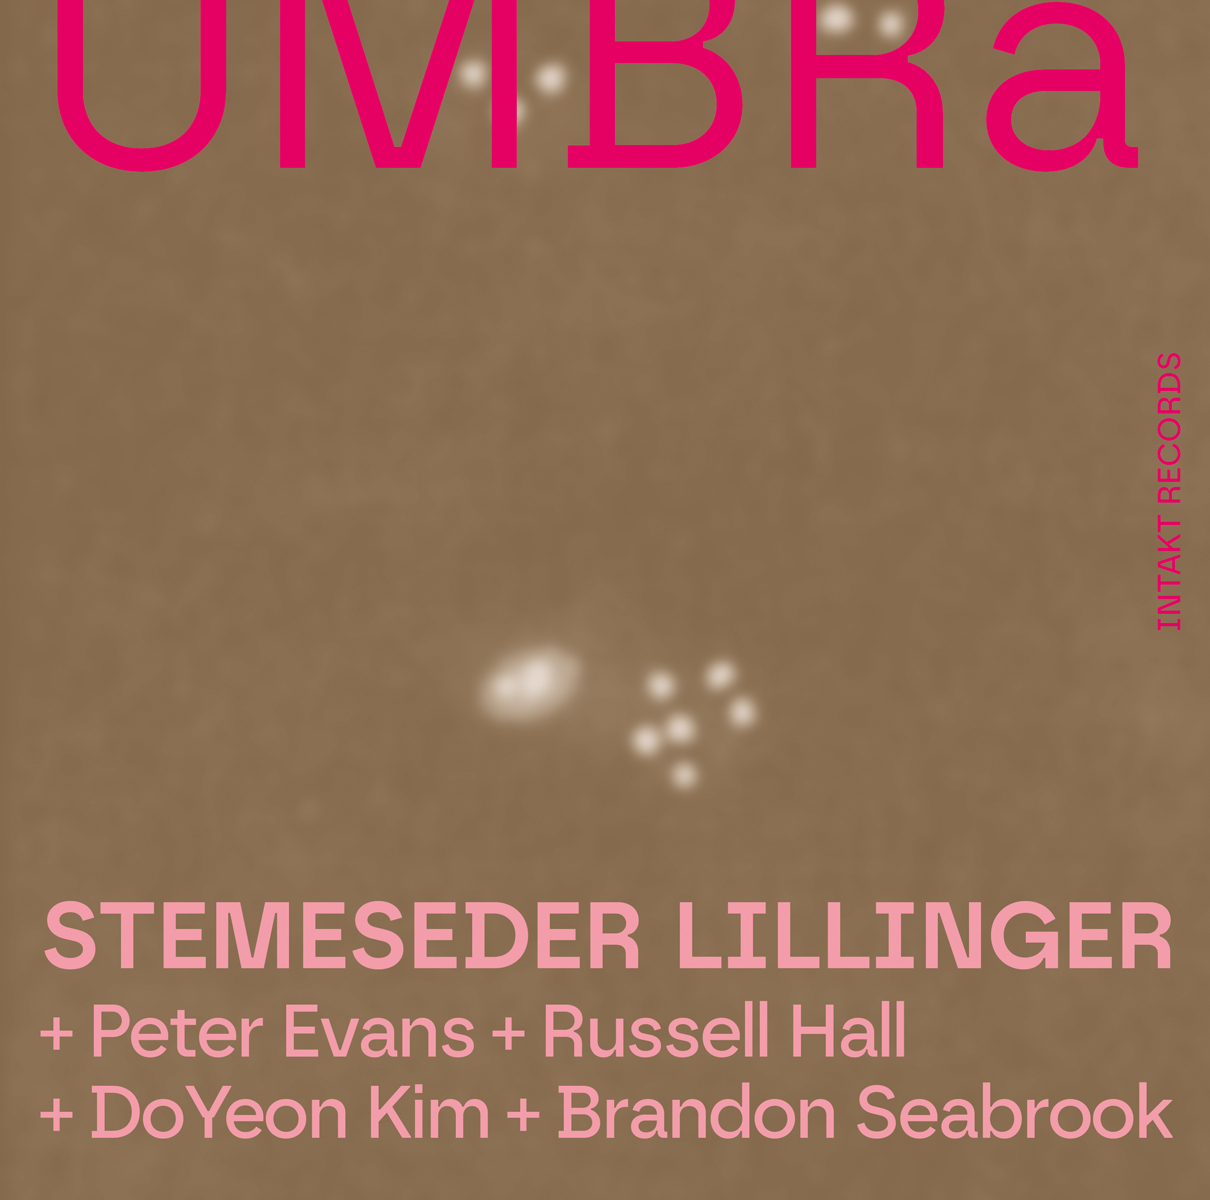 Cover Web:STEMESEDER LILLINGER
UMBRA. Intakt CD 405 cover Paul Bieri